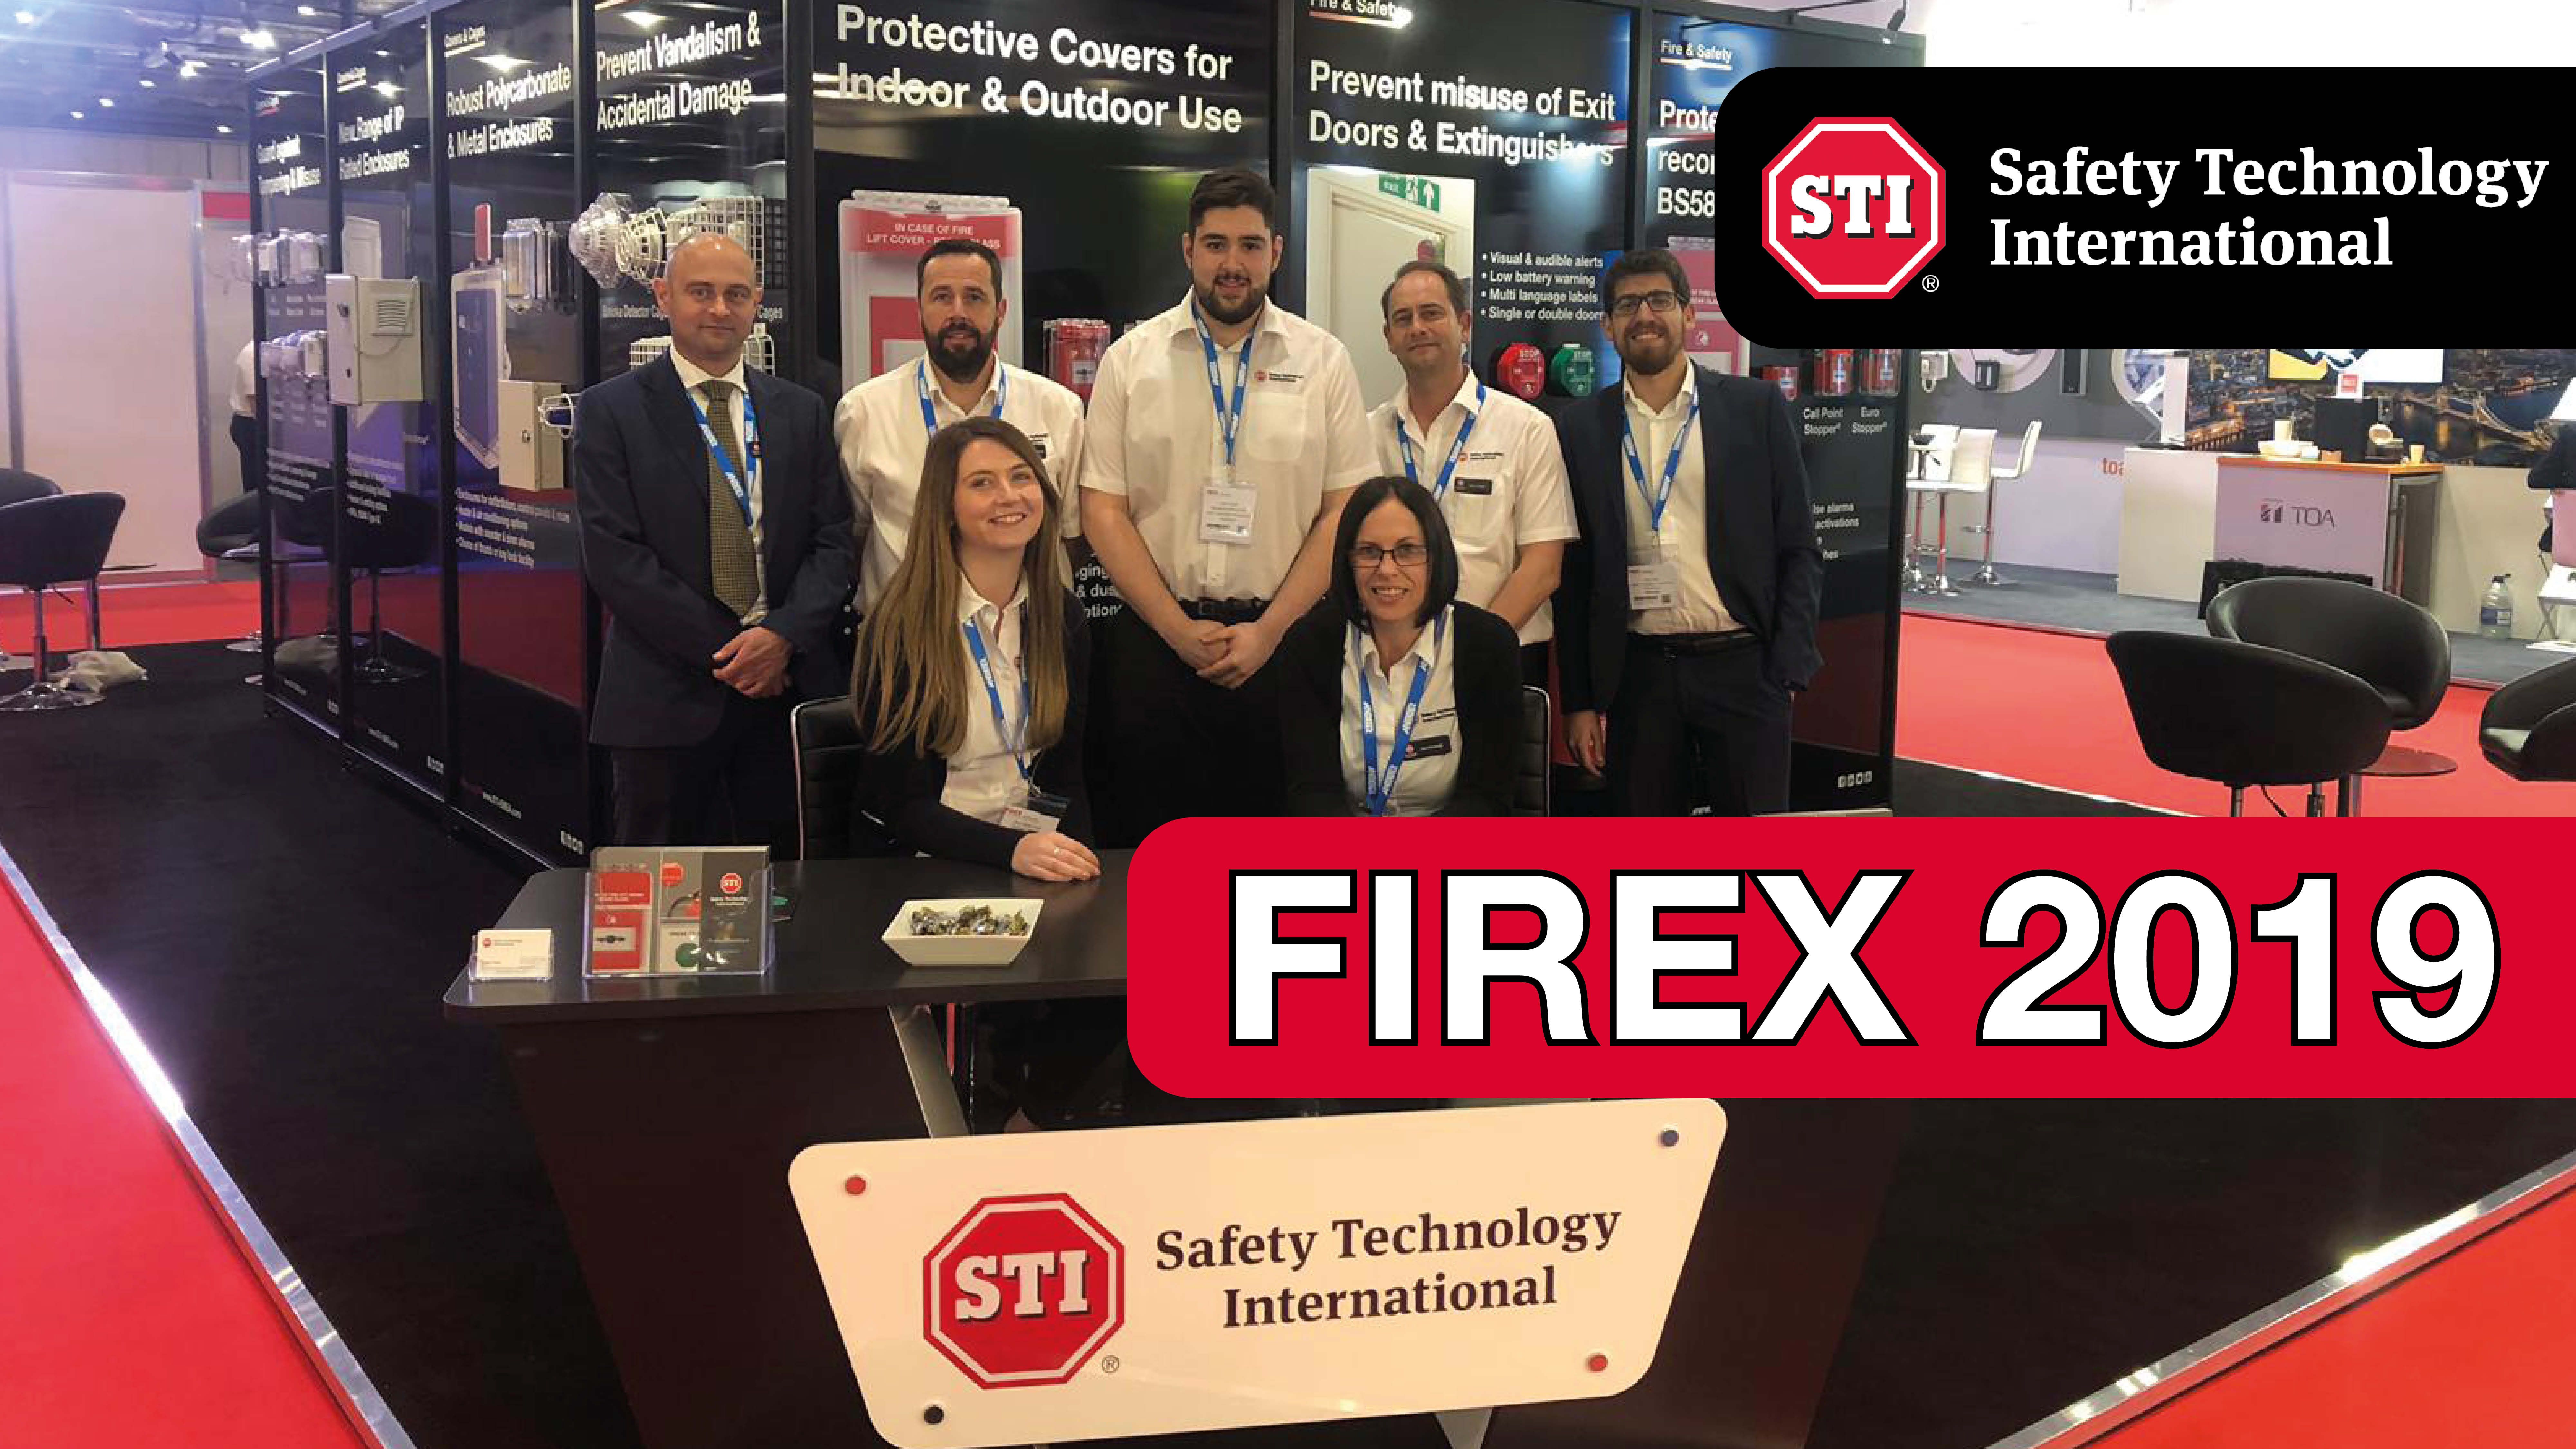 FIREX 2019 Social Media Highlights - Safety Technology International